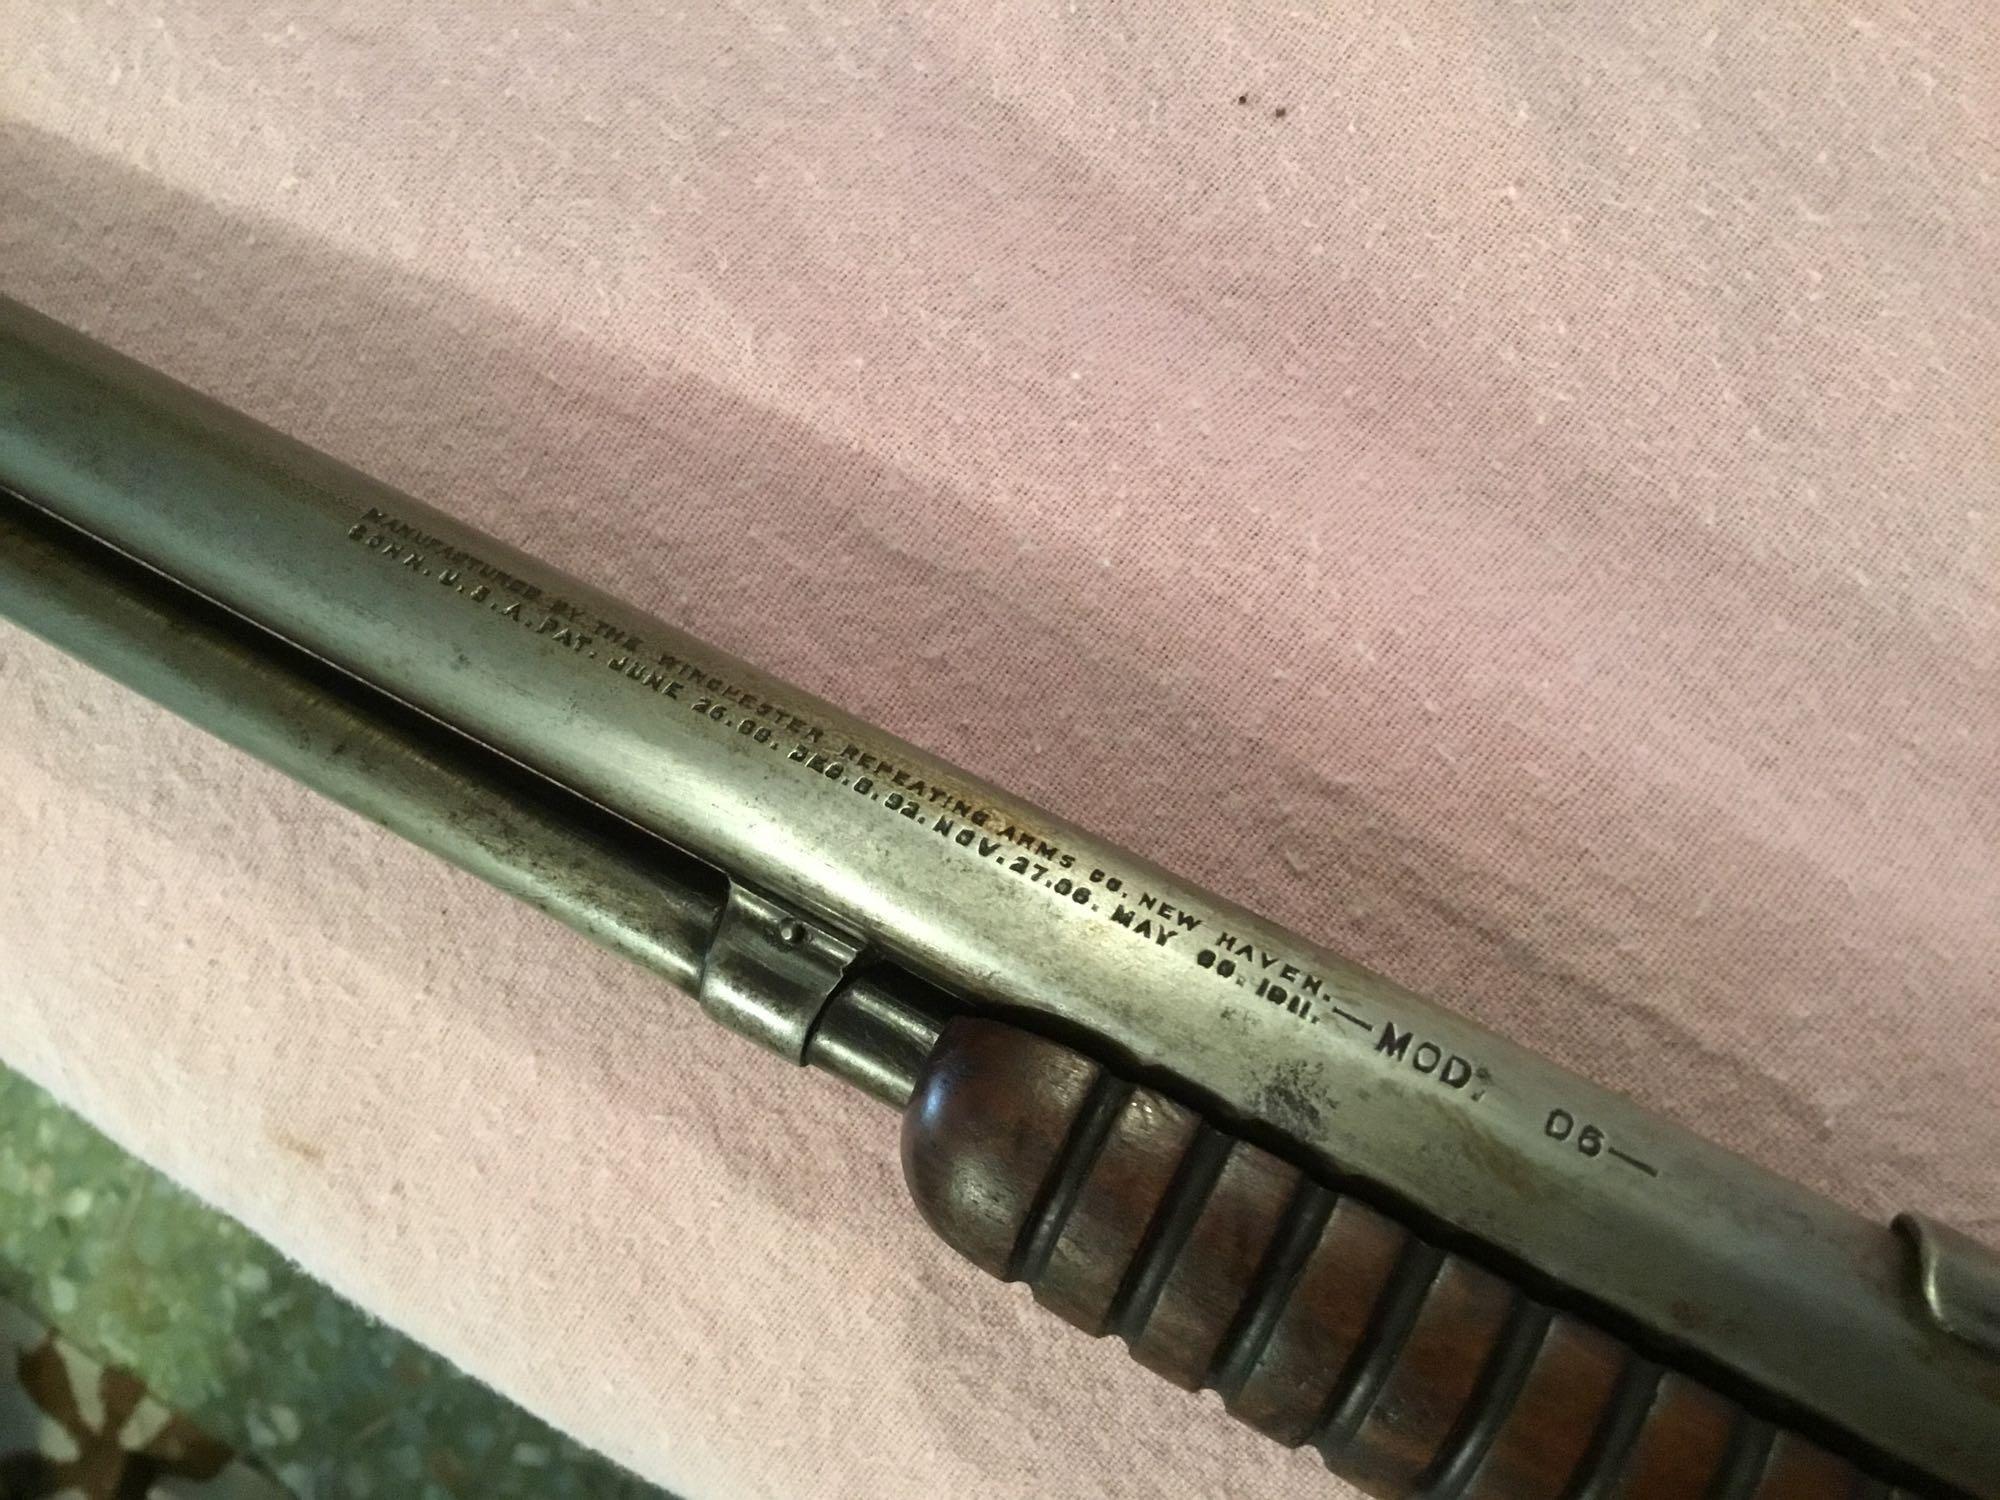 Winchester Model #6 22 Pump